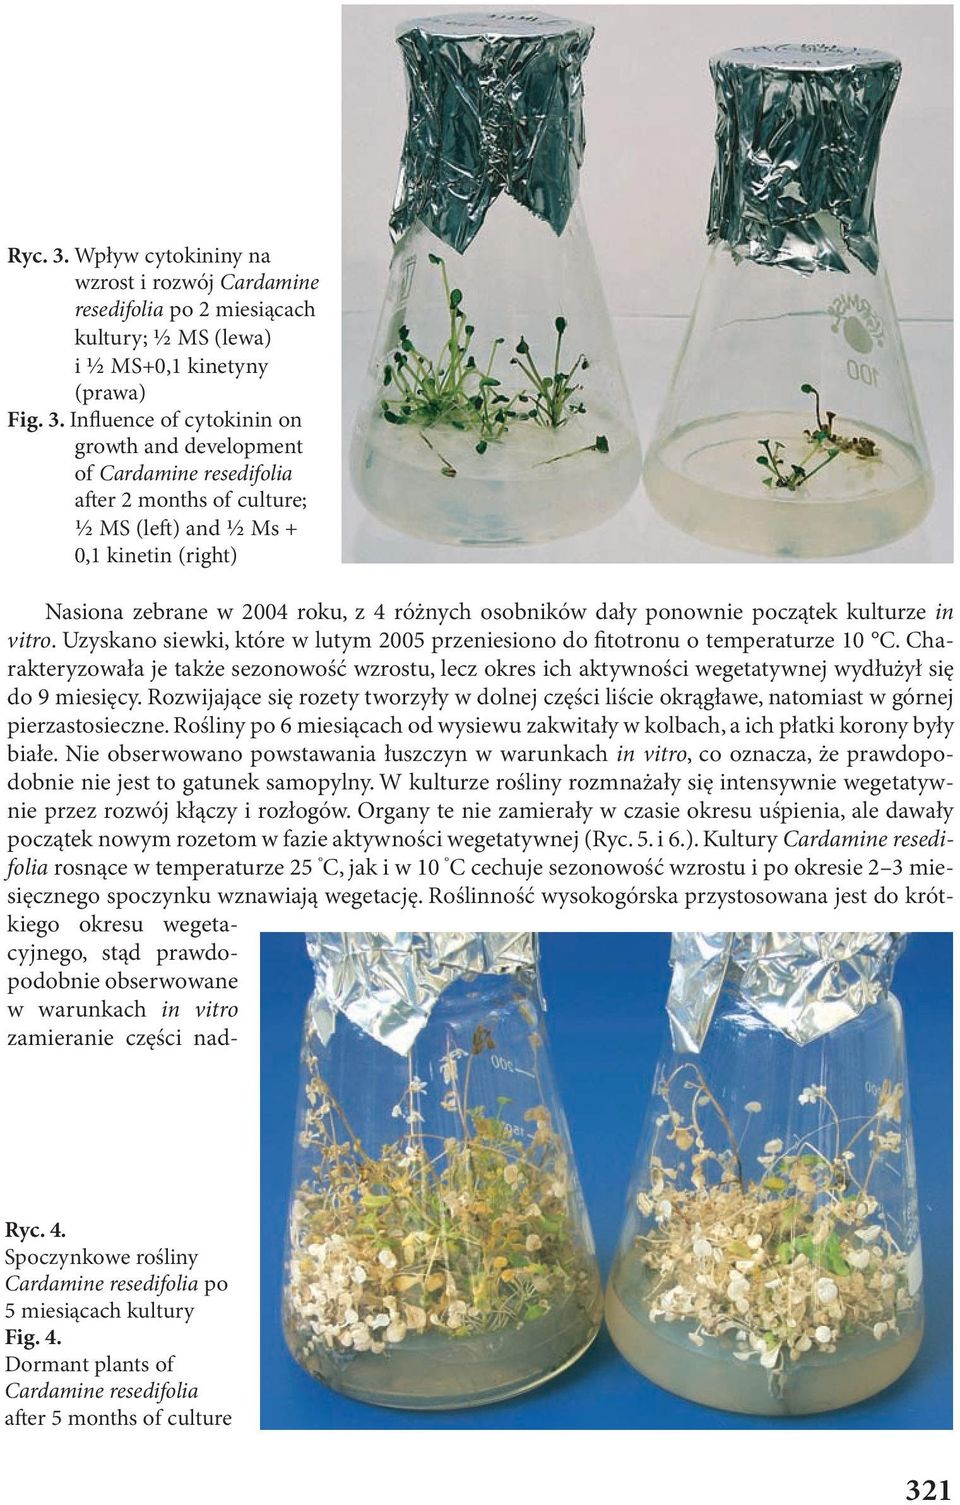 Influence of cytokinin on growth and development of Cardamine resedifolia a er 2 months of culture; 1 2 MS (le ) and 1 2 Ms + 0,1 kinetin (right) Nasiona zebrane w 2004 roku, z 4 różnych osobników